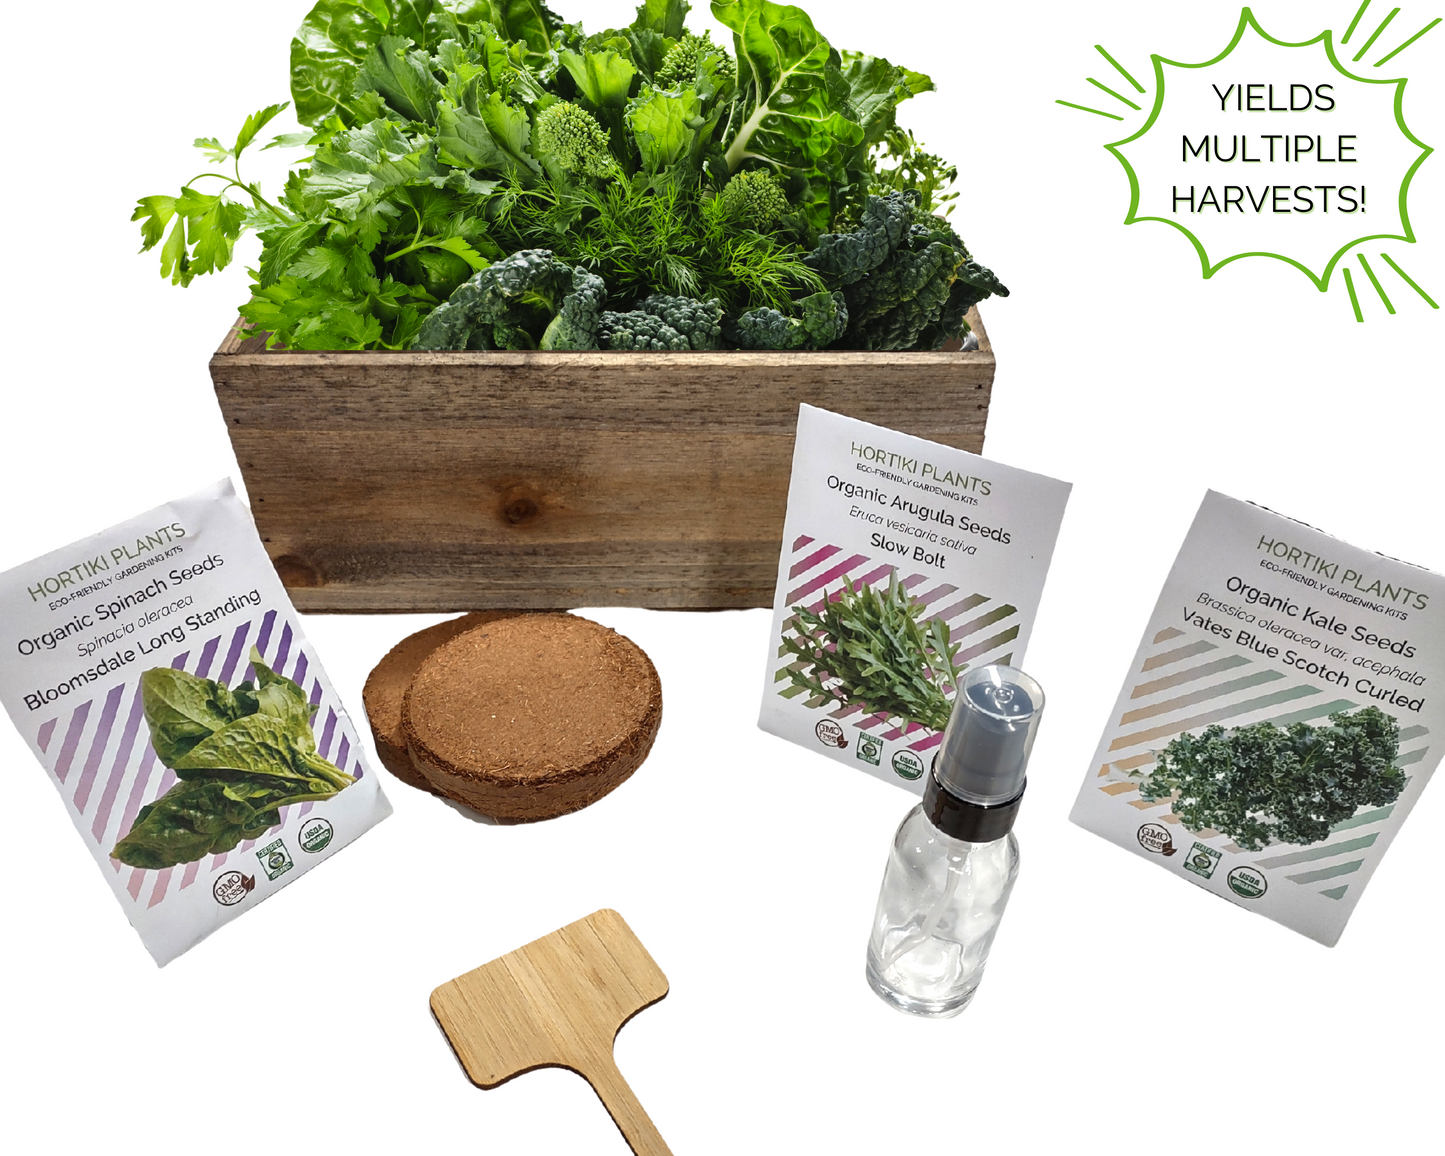 Green Smoothie Organic Garden Kit: Arugula, Spinach, Kale - Corporate Gift